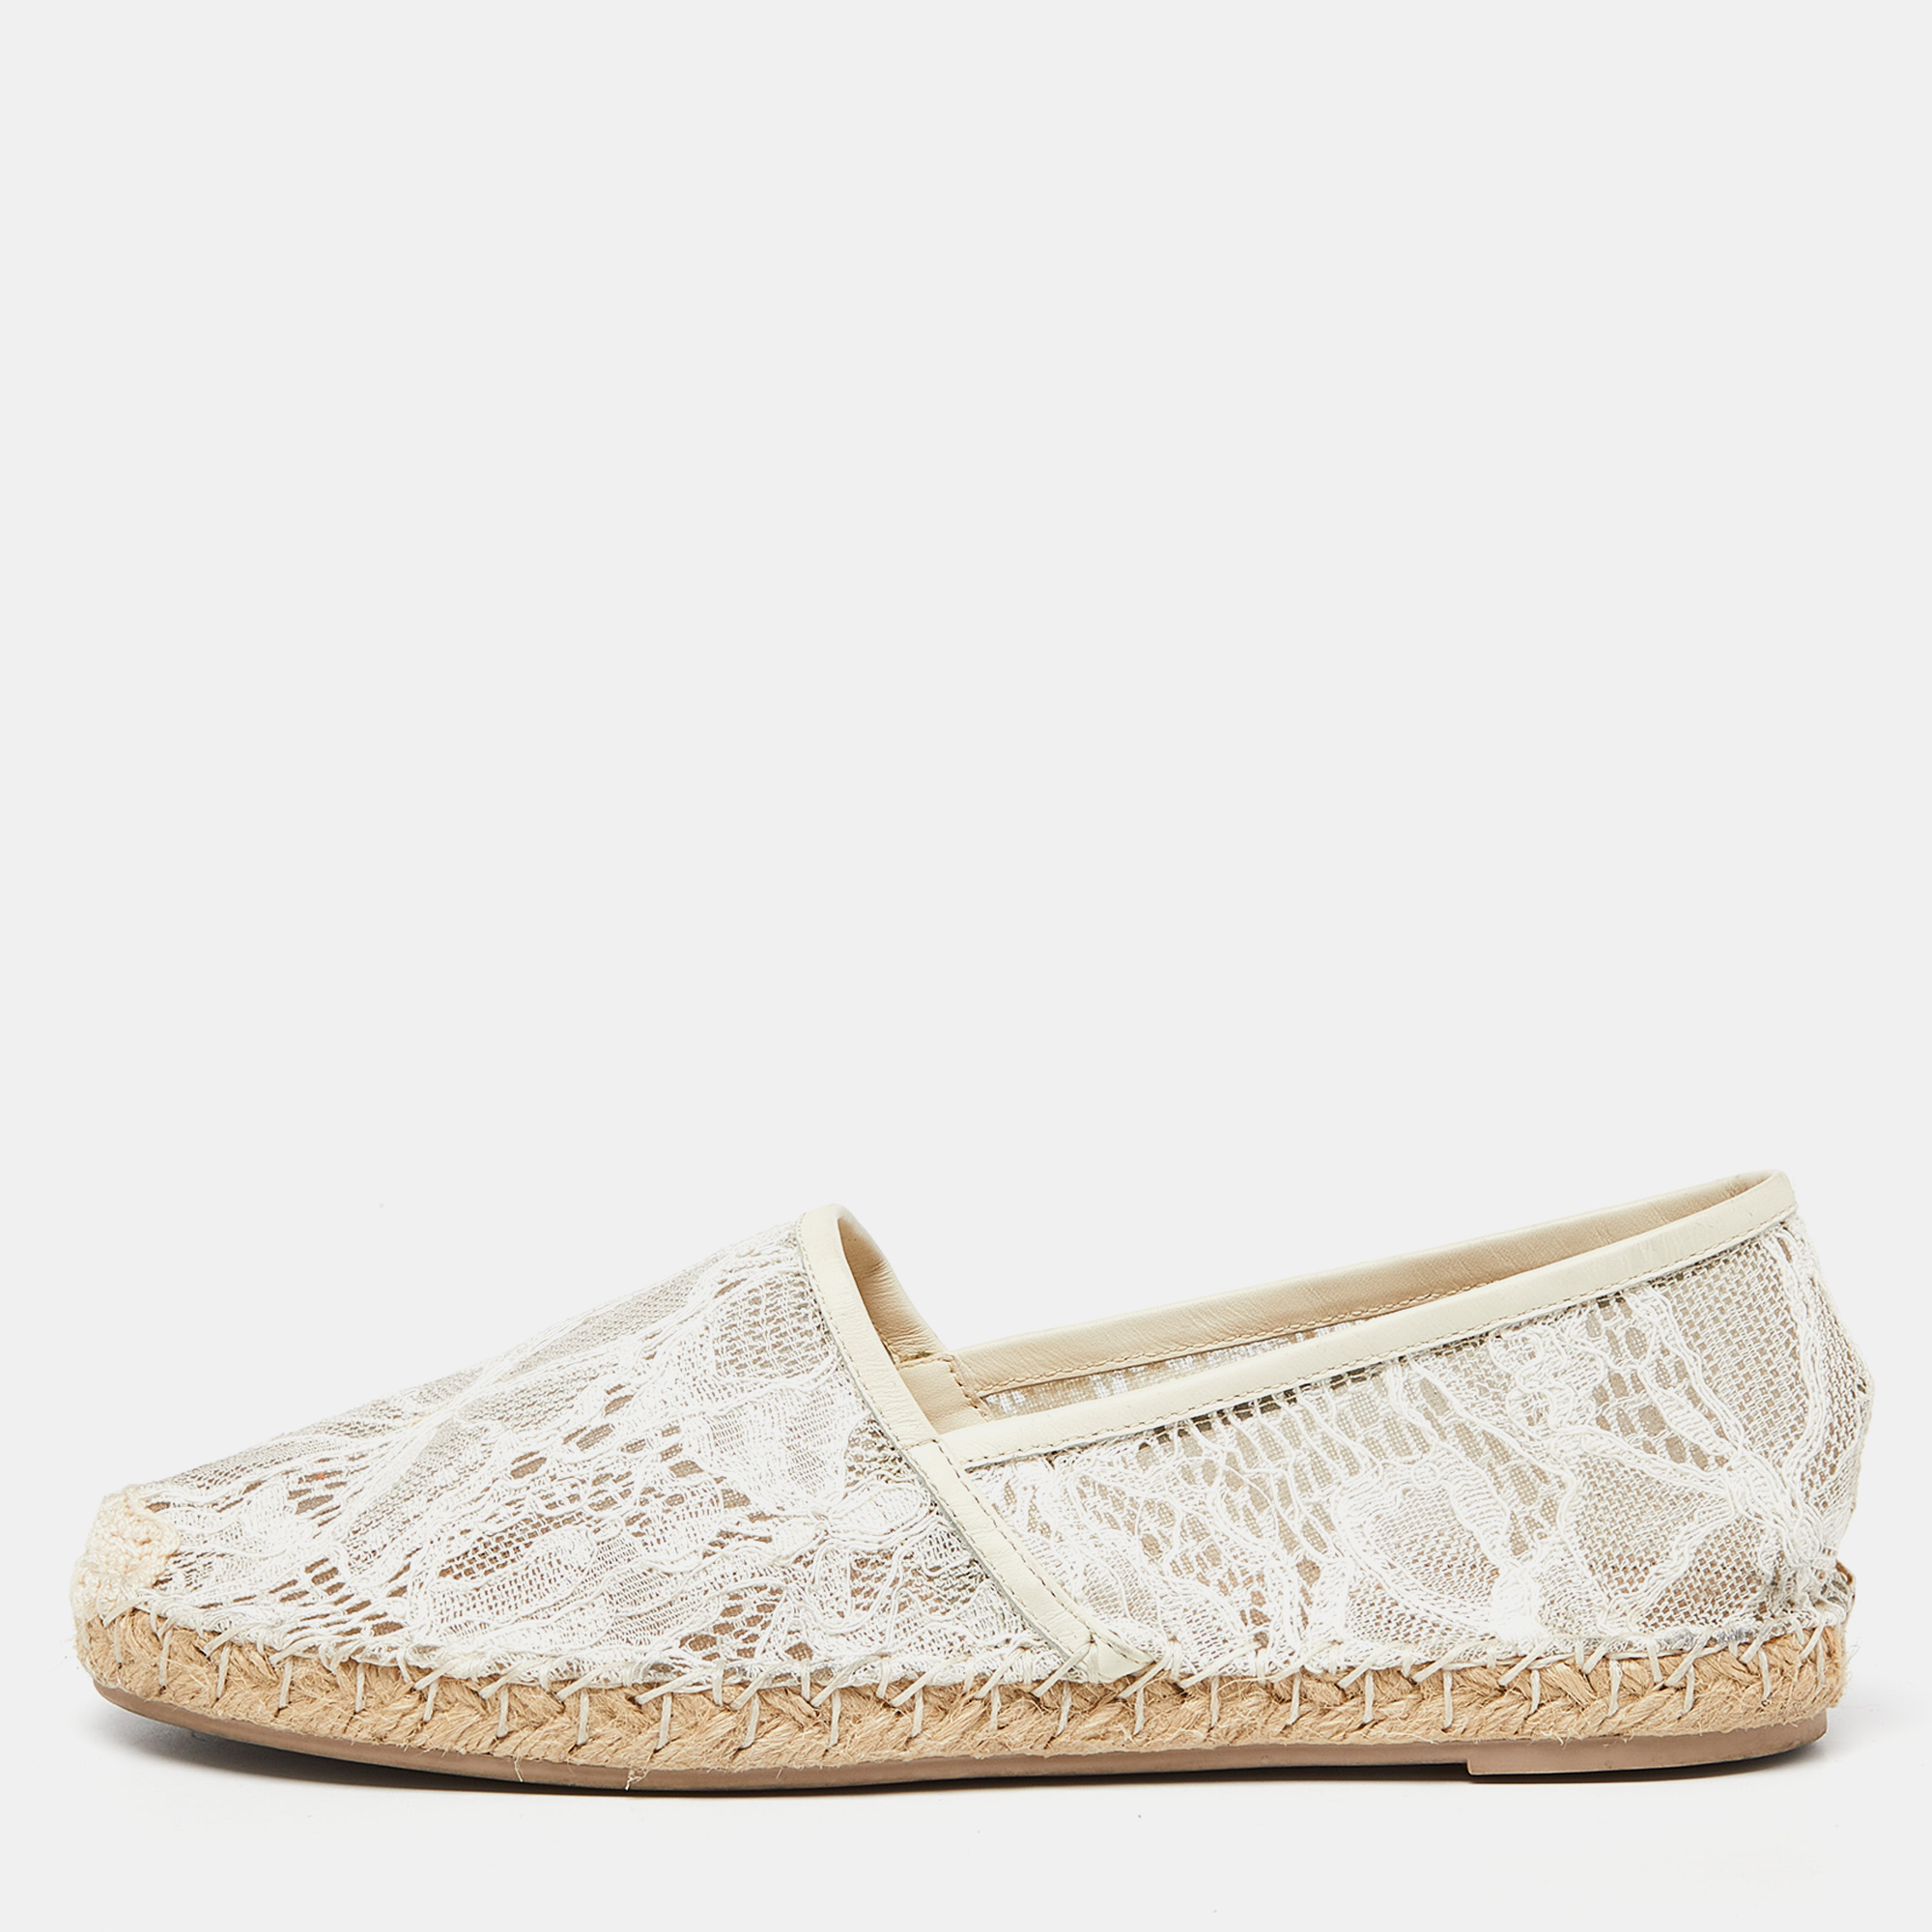 Valentino white lace espadrille flats size 37